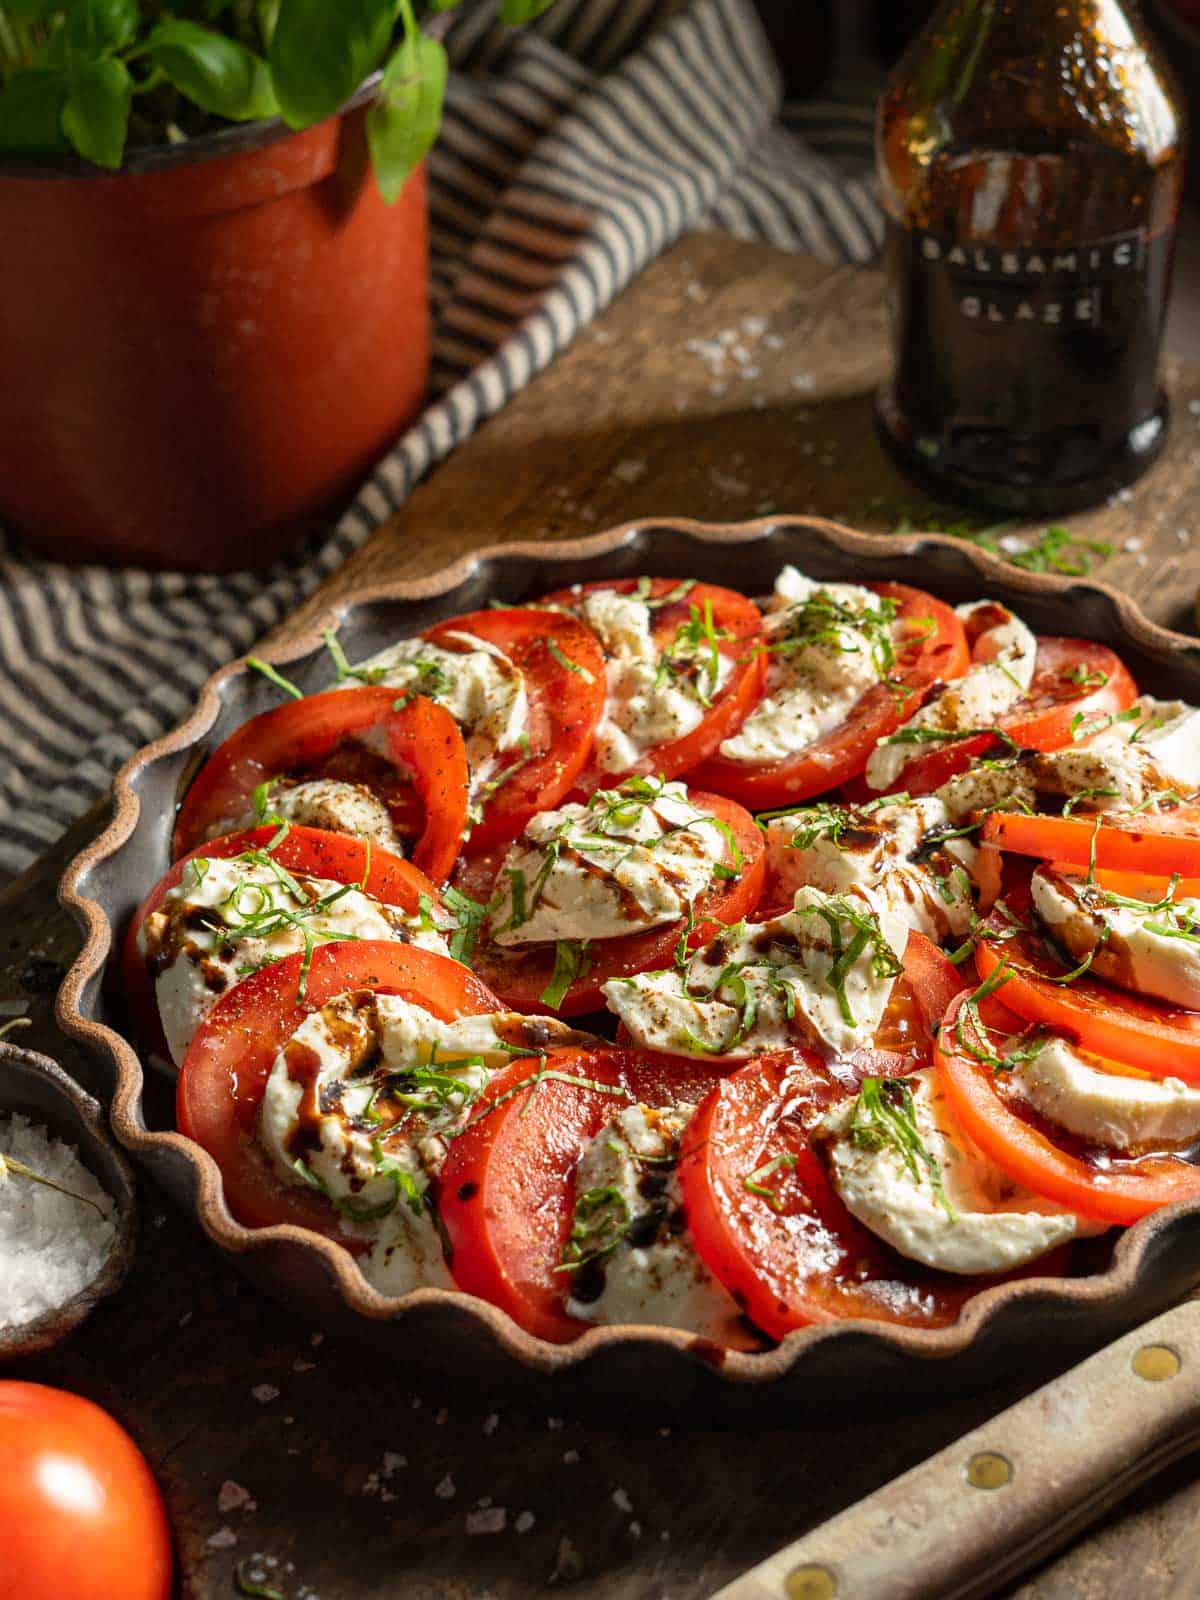 Burrata caprese salad on a serving platter with a bottle of balsamic glaze behind it.